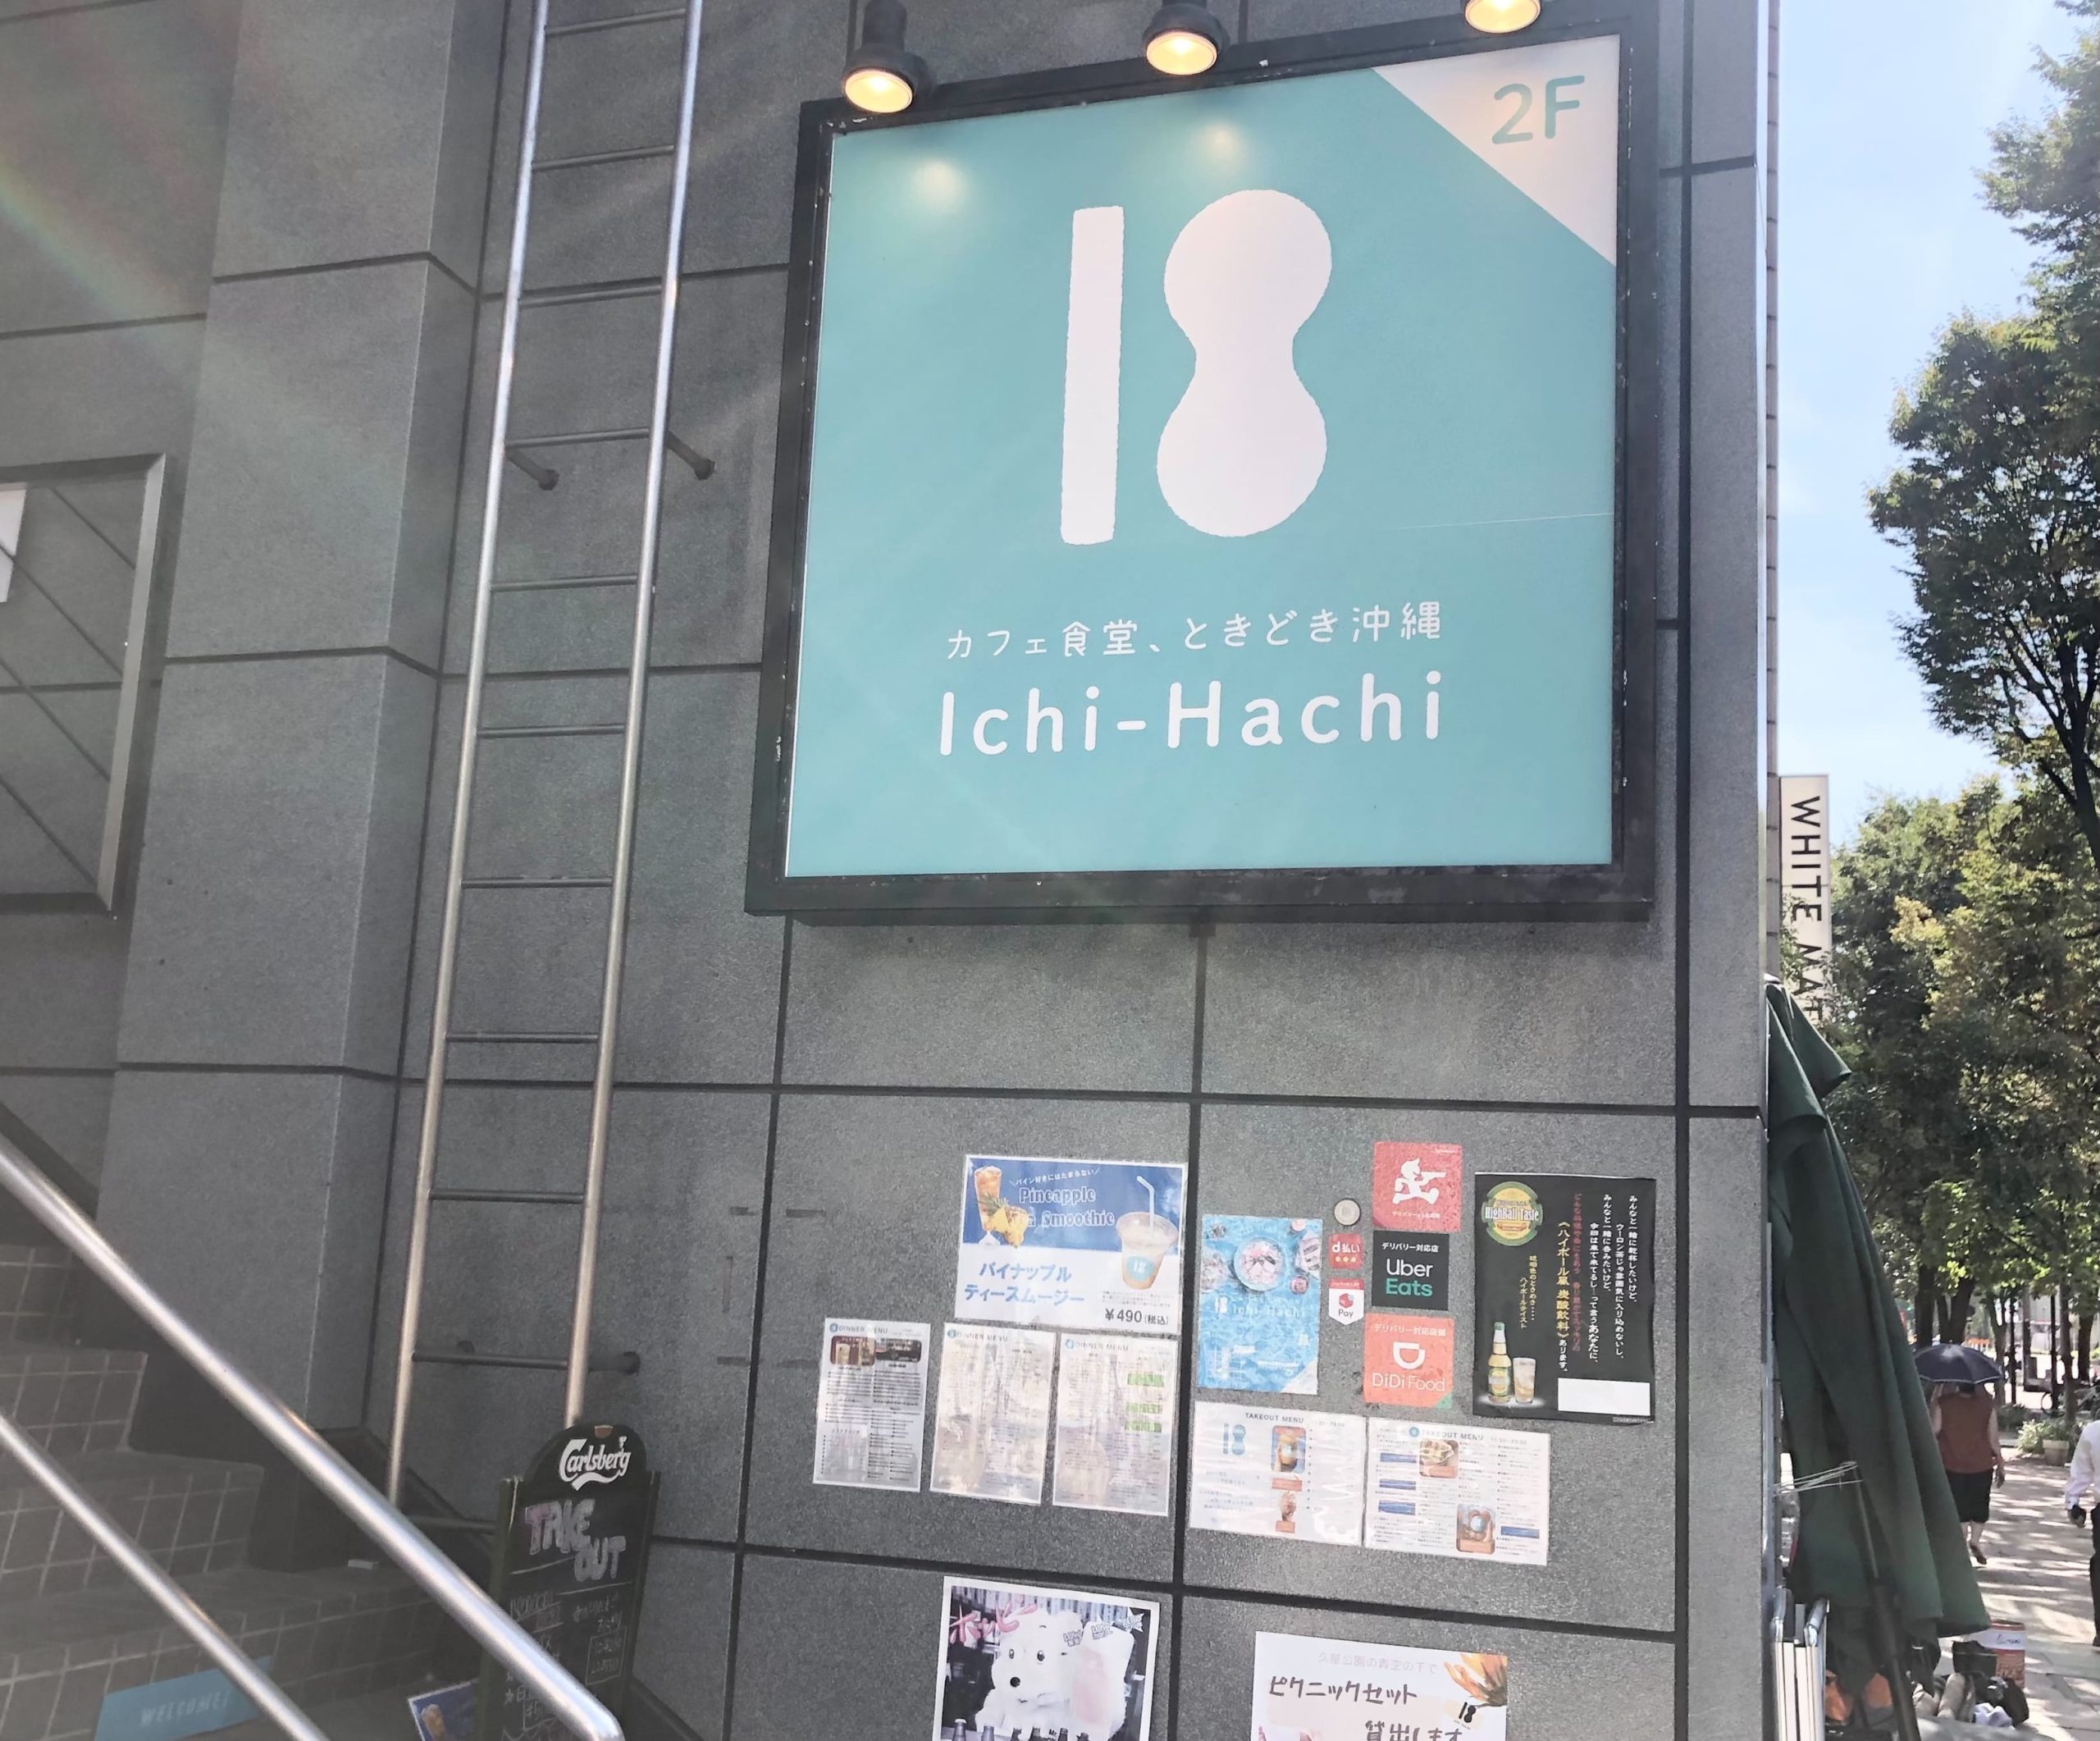 「Ichi-Hachi」の外観